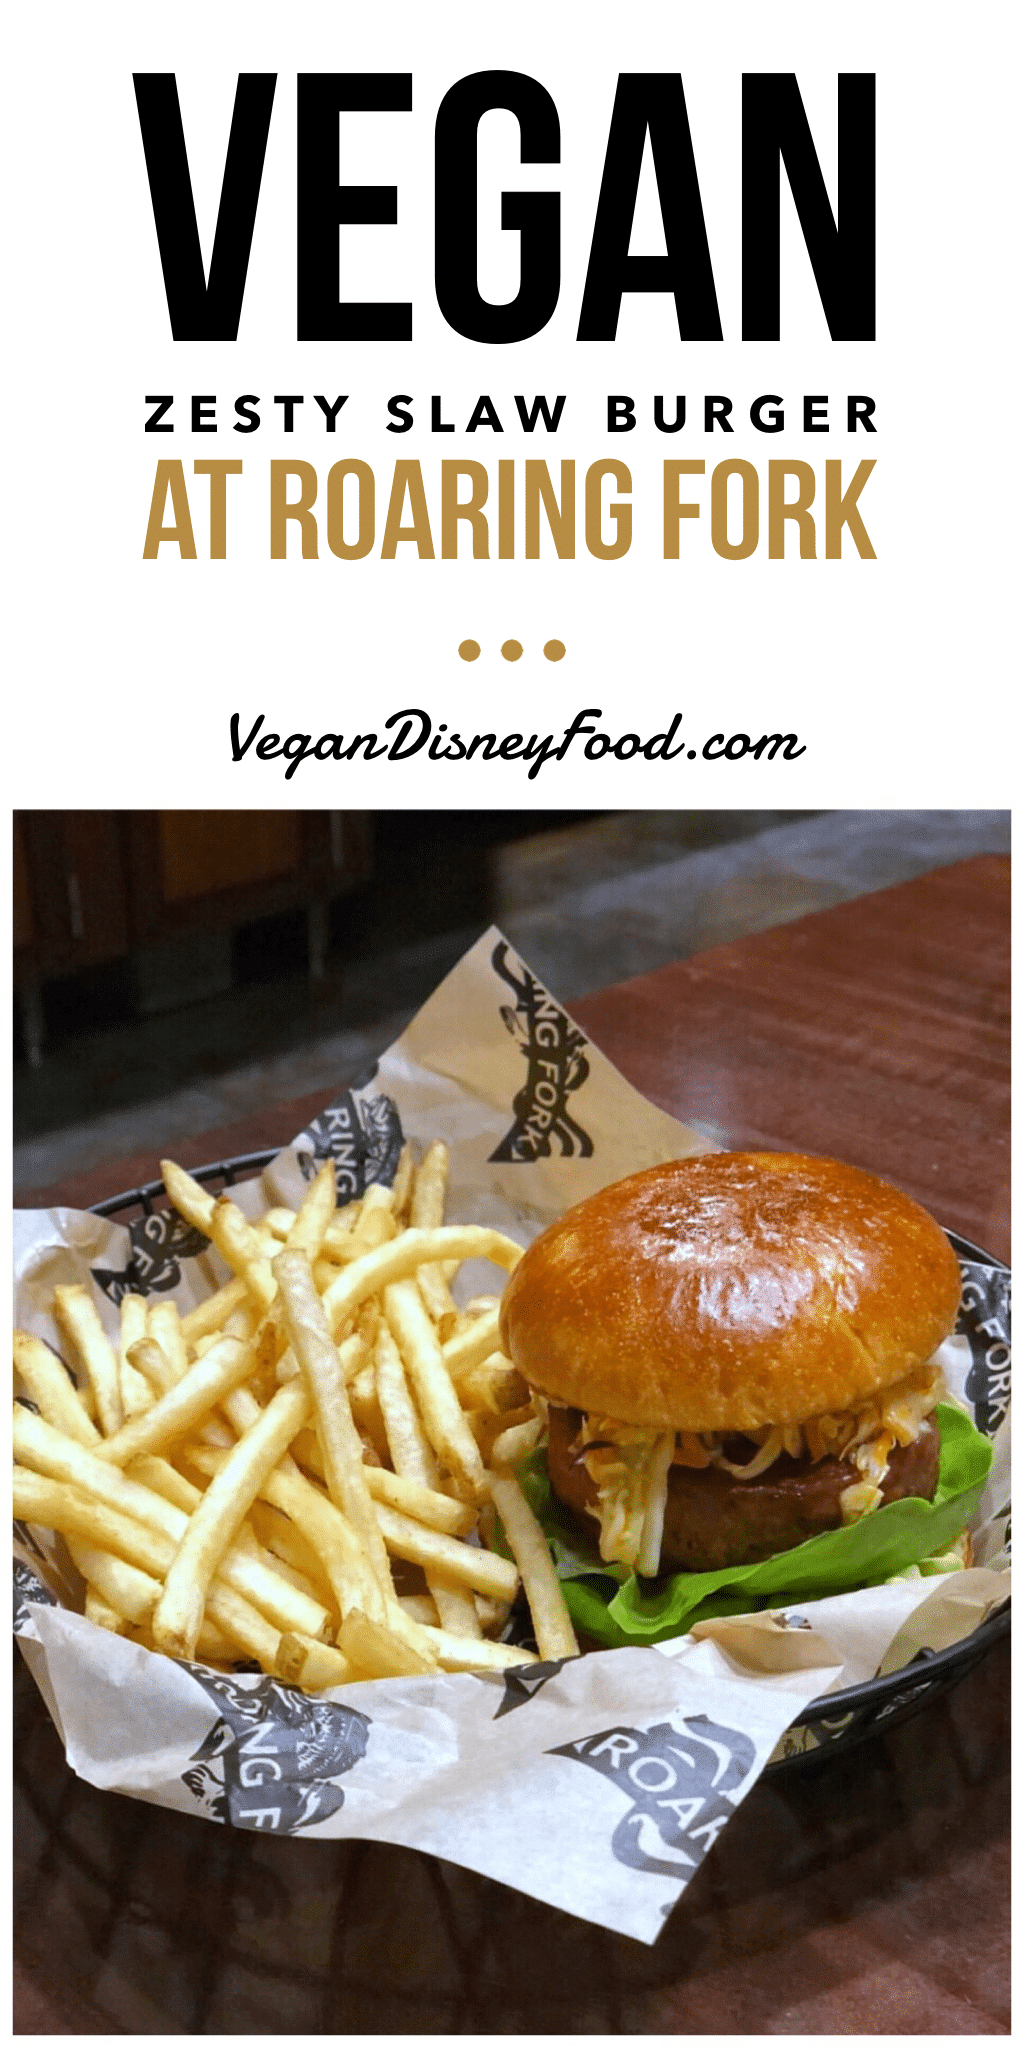 Vegan Zesty Slaw Burger at Roaring Fork in Disney’s Wilderness Lodge at Walt Disney World